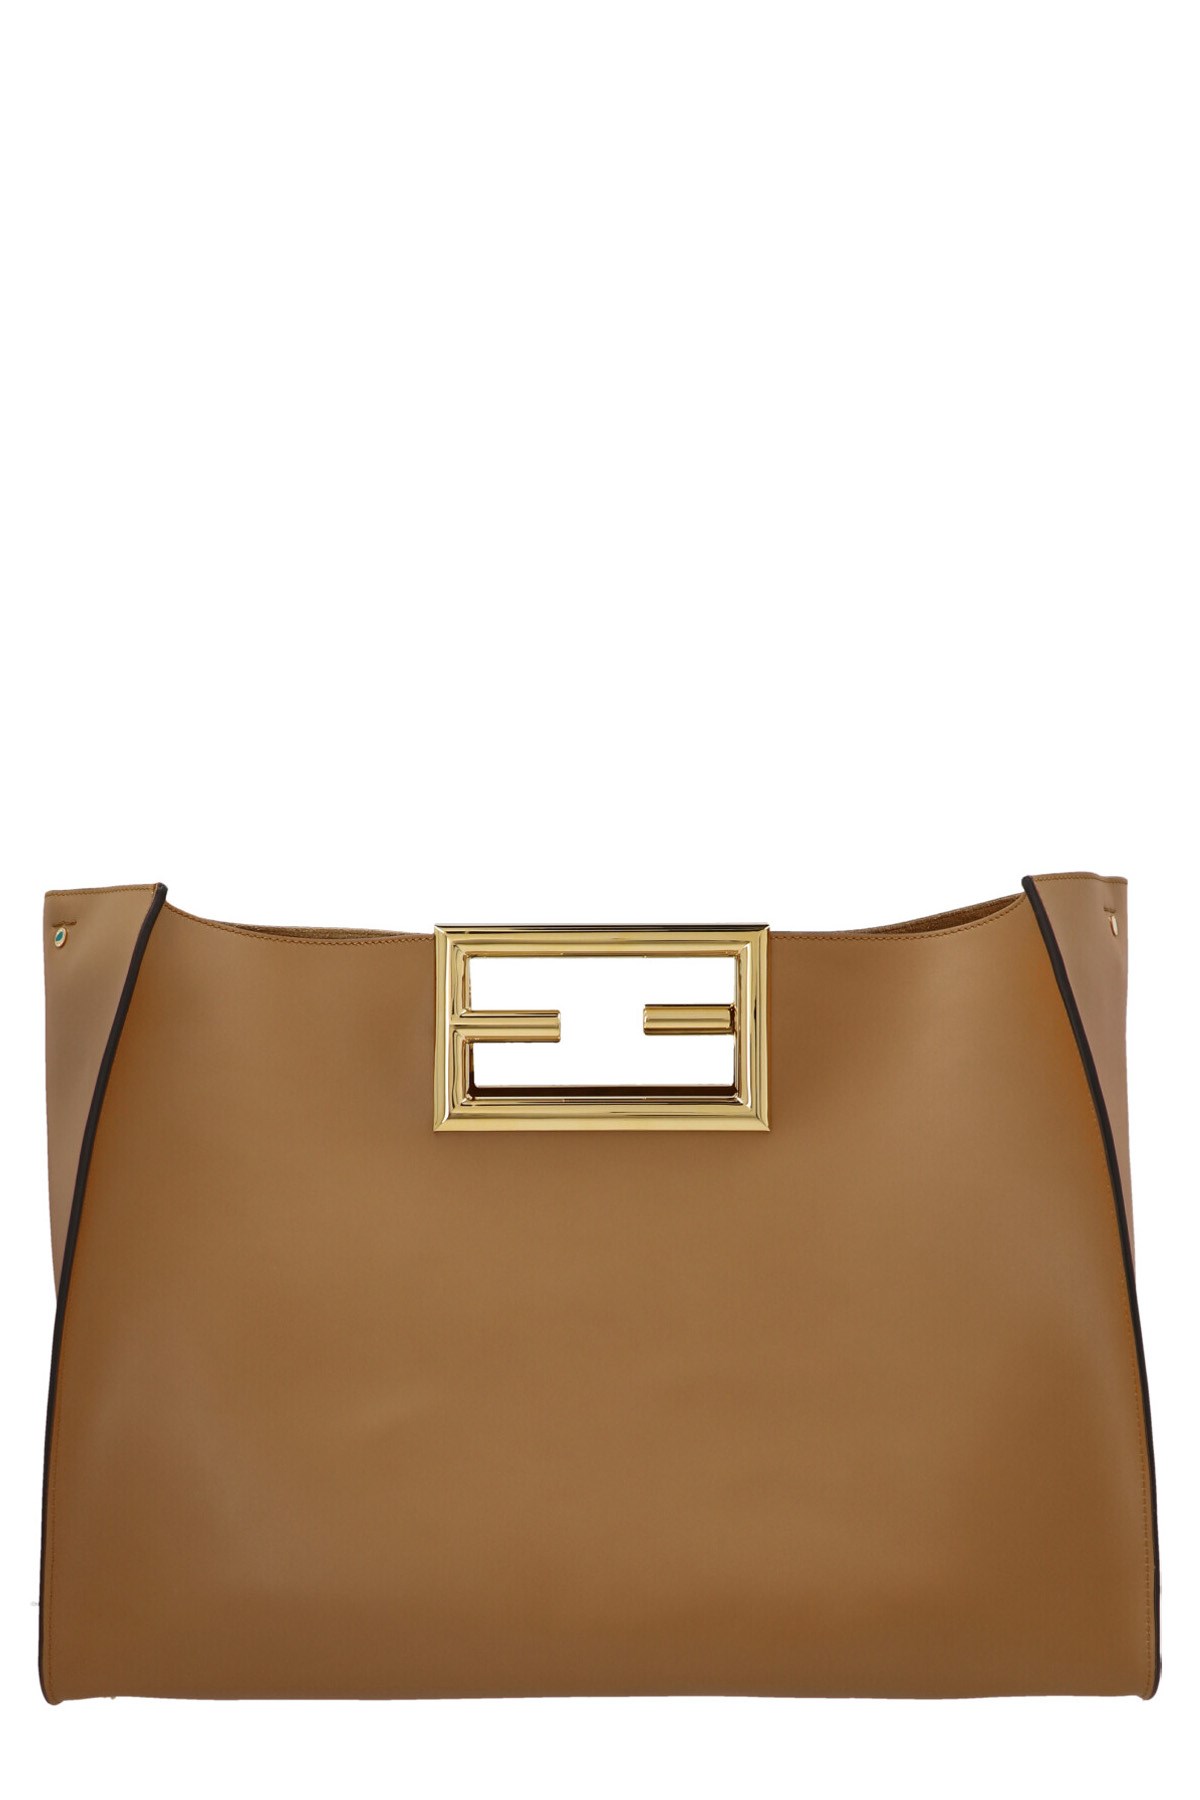 FENDI 'Fendi Way’ Large Handbag